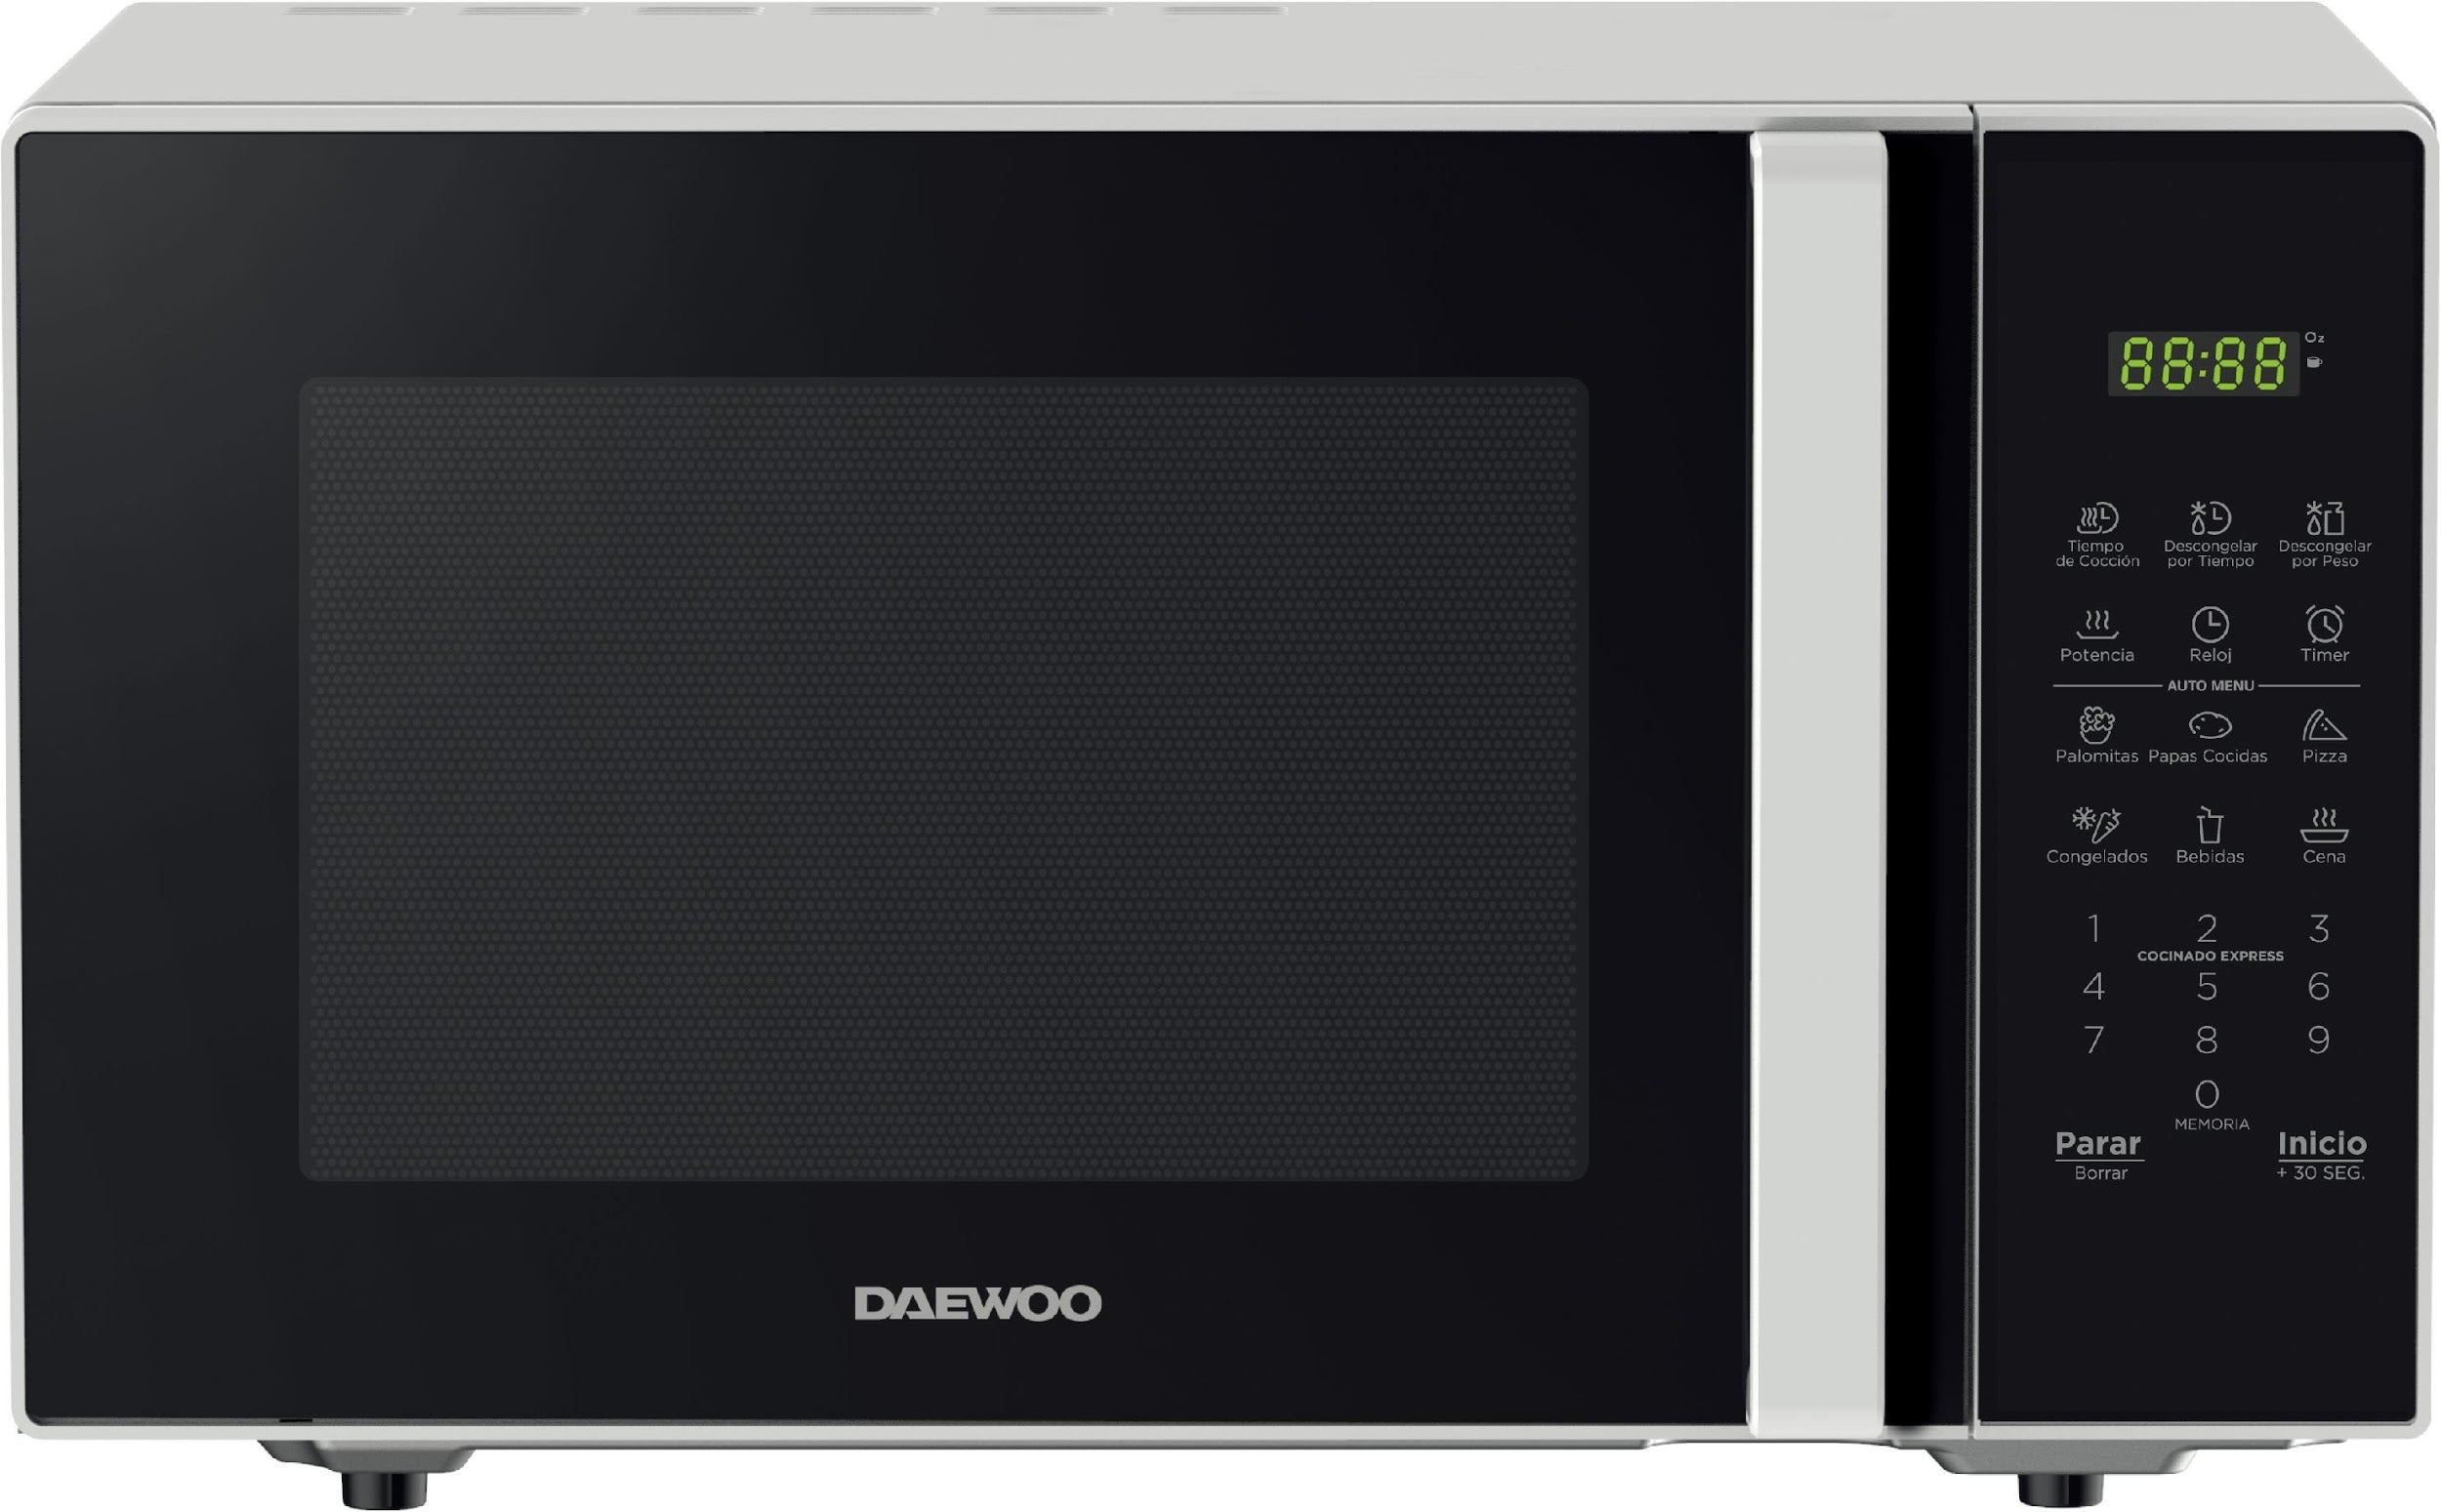 Daewoo Electronics presenta su nuevo Microondas Retro